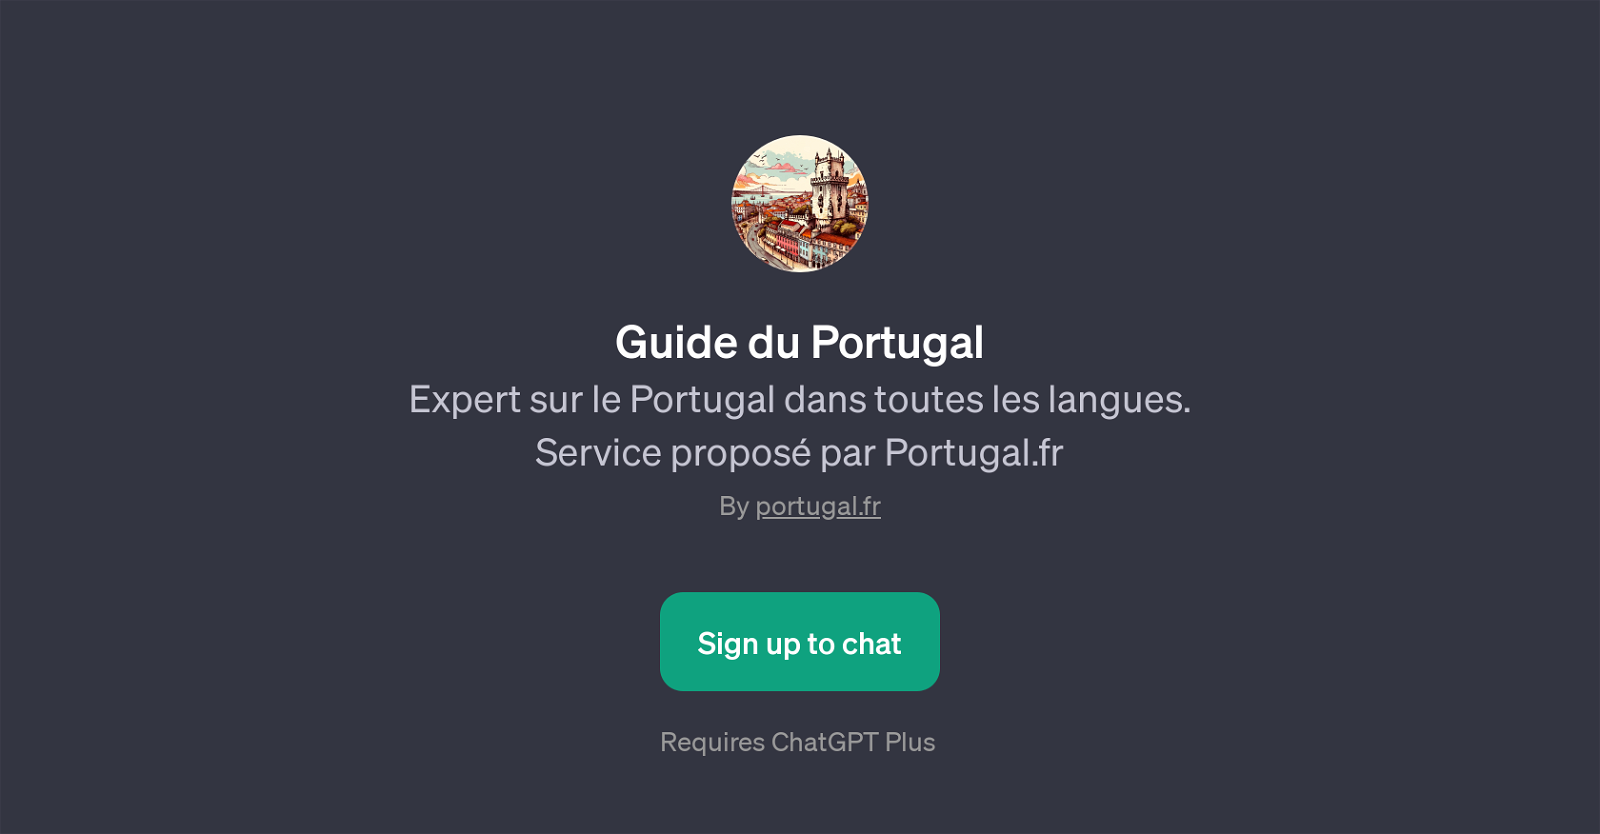 Guide du Portugal website